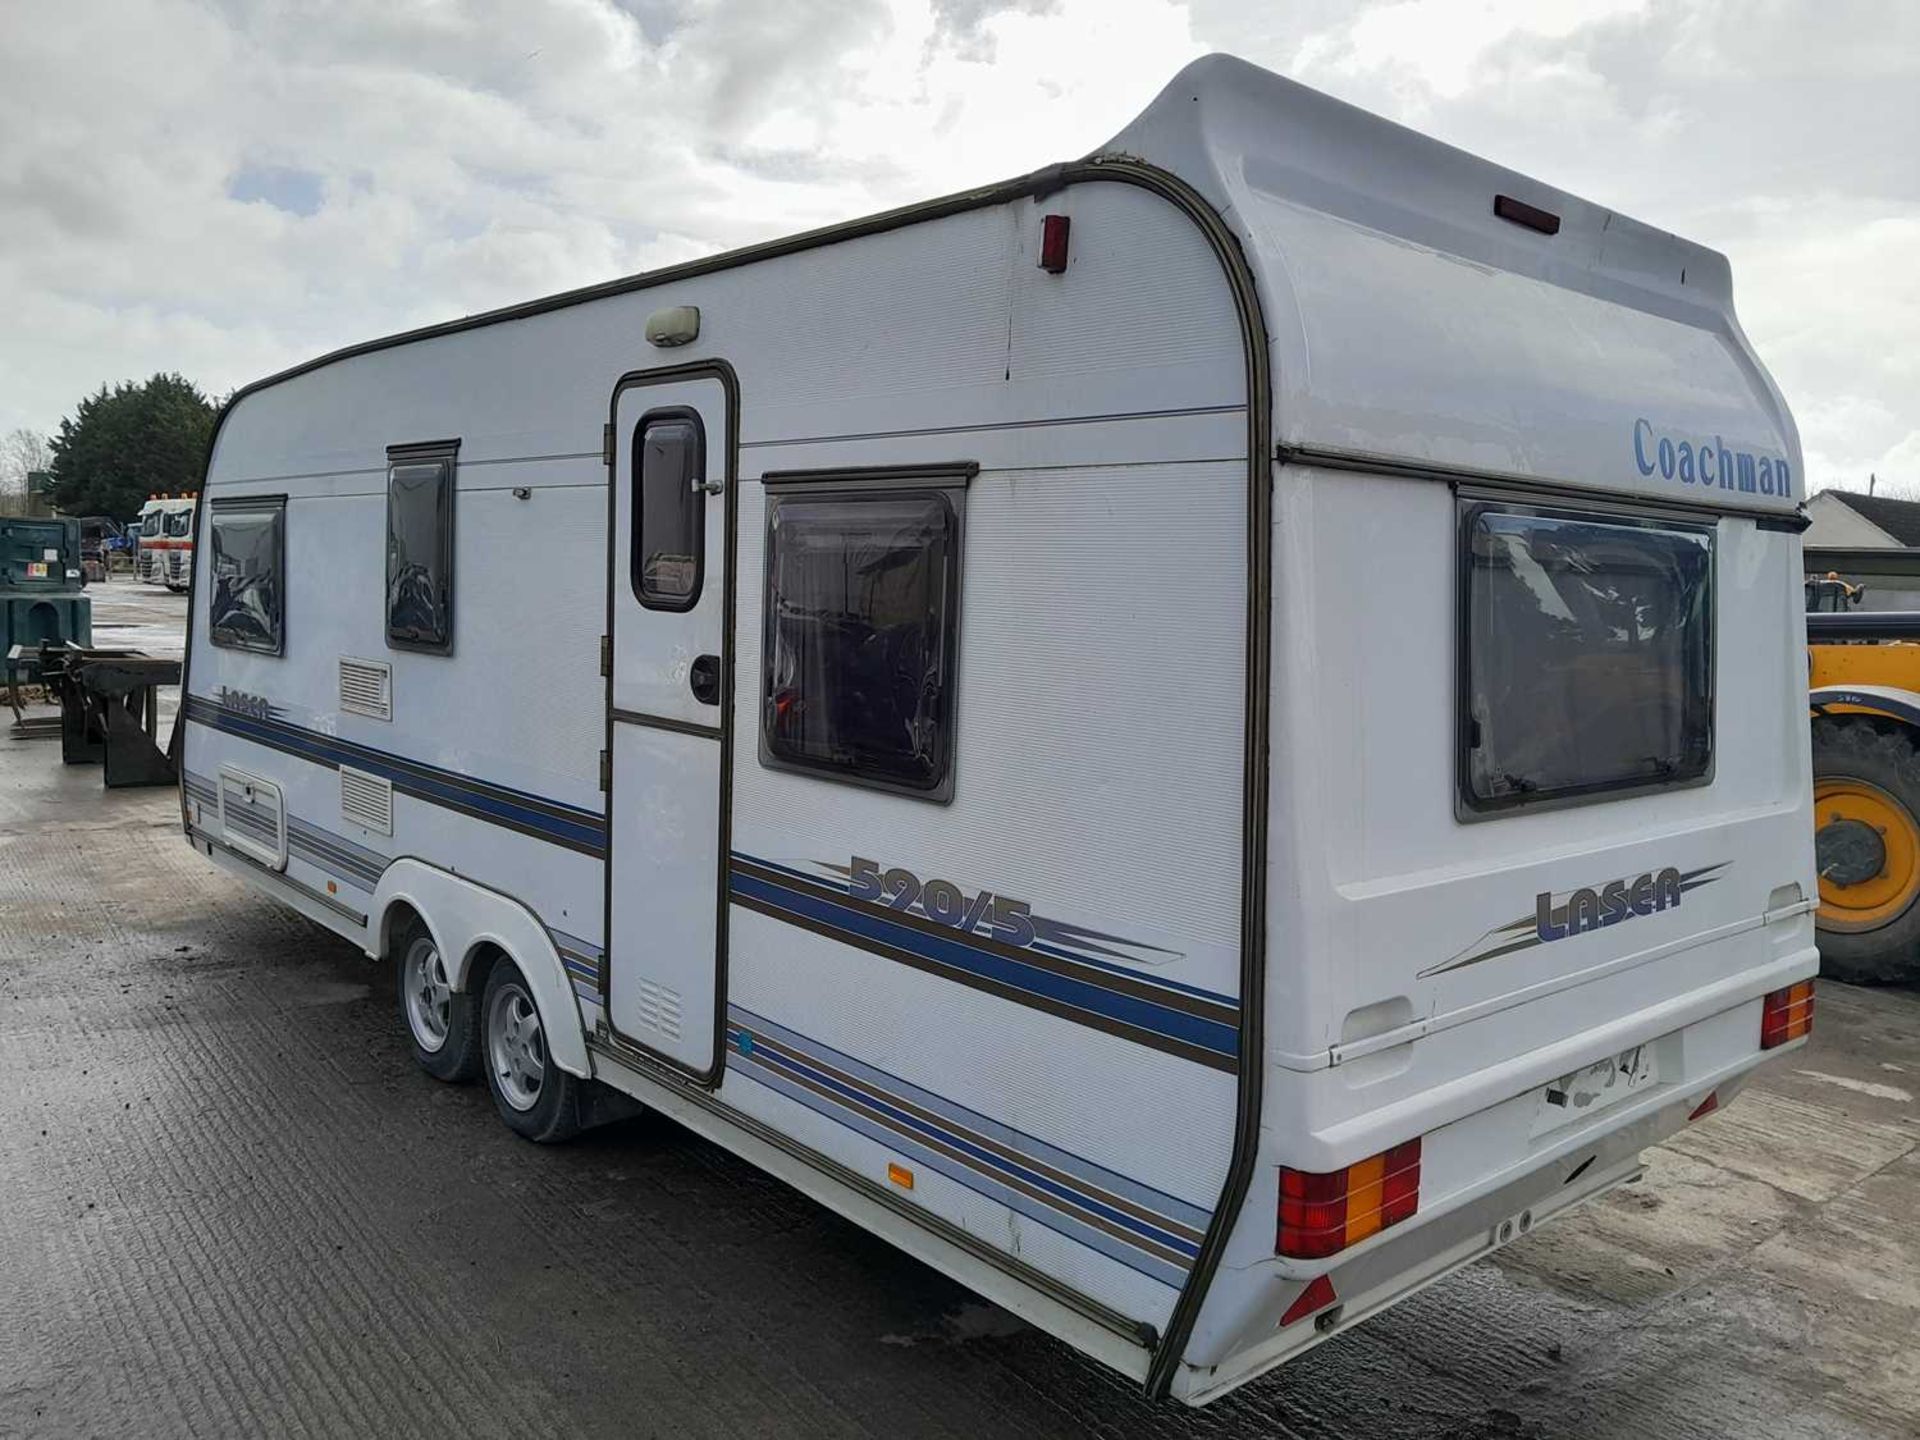 Coachman LASER 590/5 Twin Axle 2 Berth Caravan, Kitchen, Lounge, Toilet - Image 2 of 15